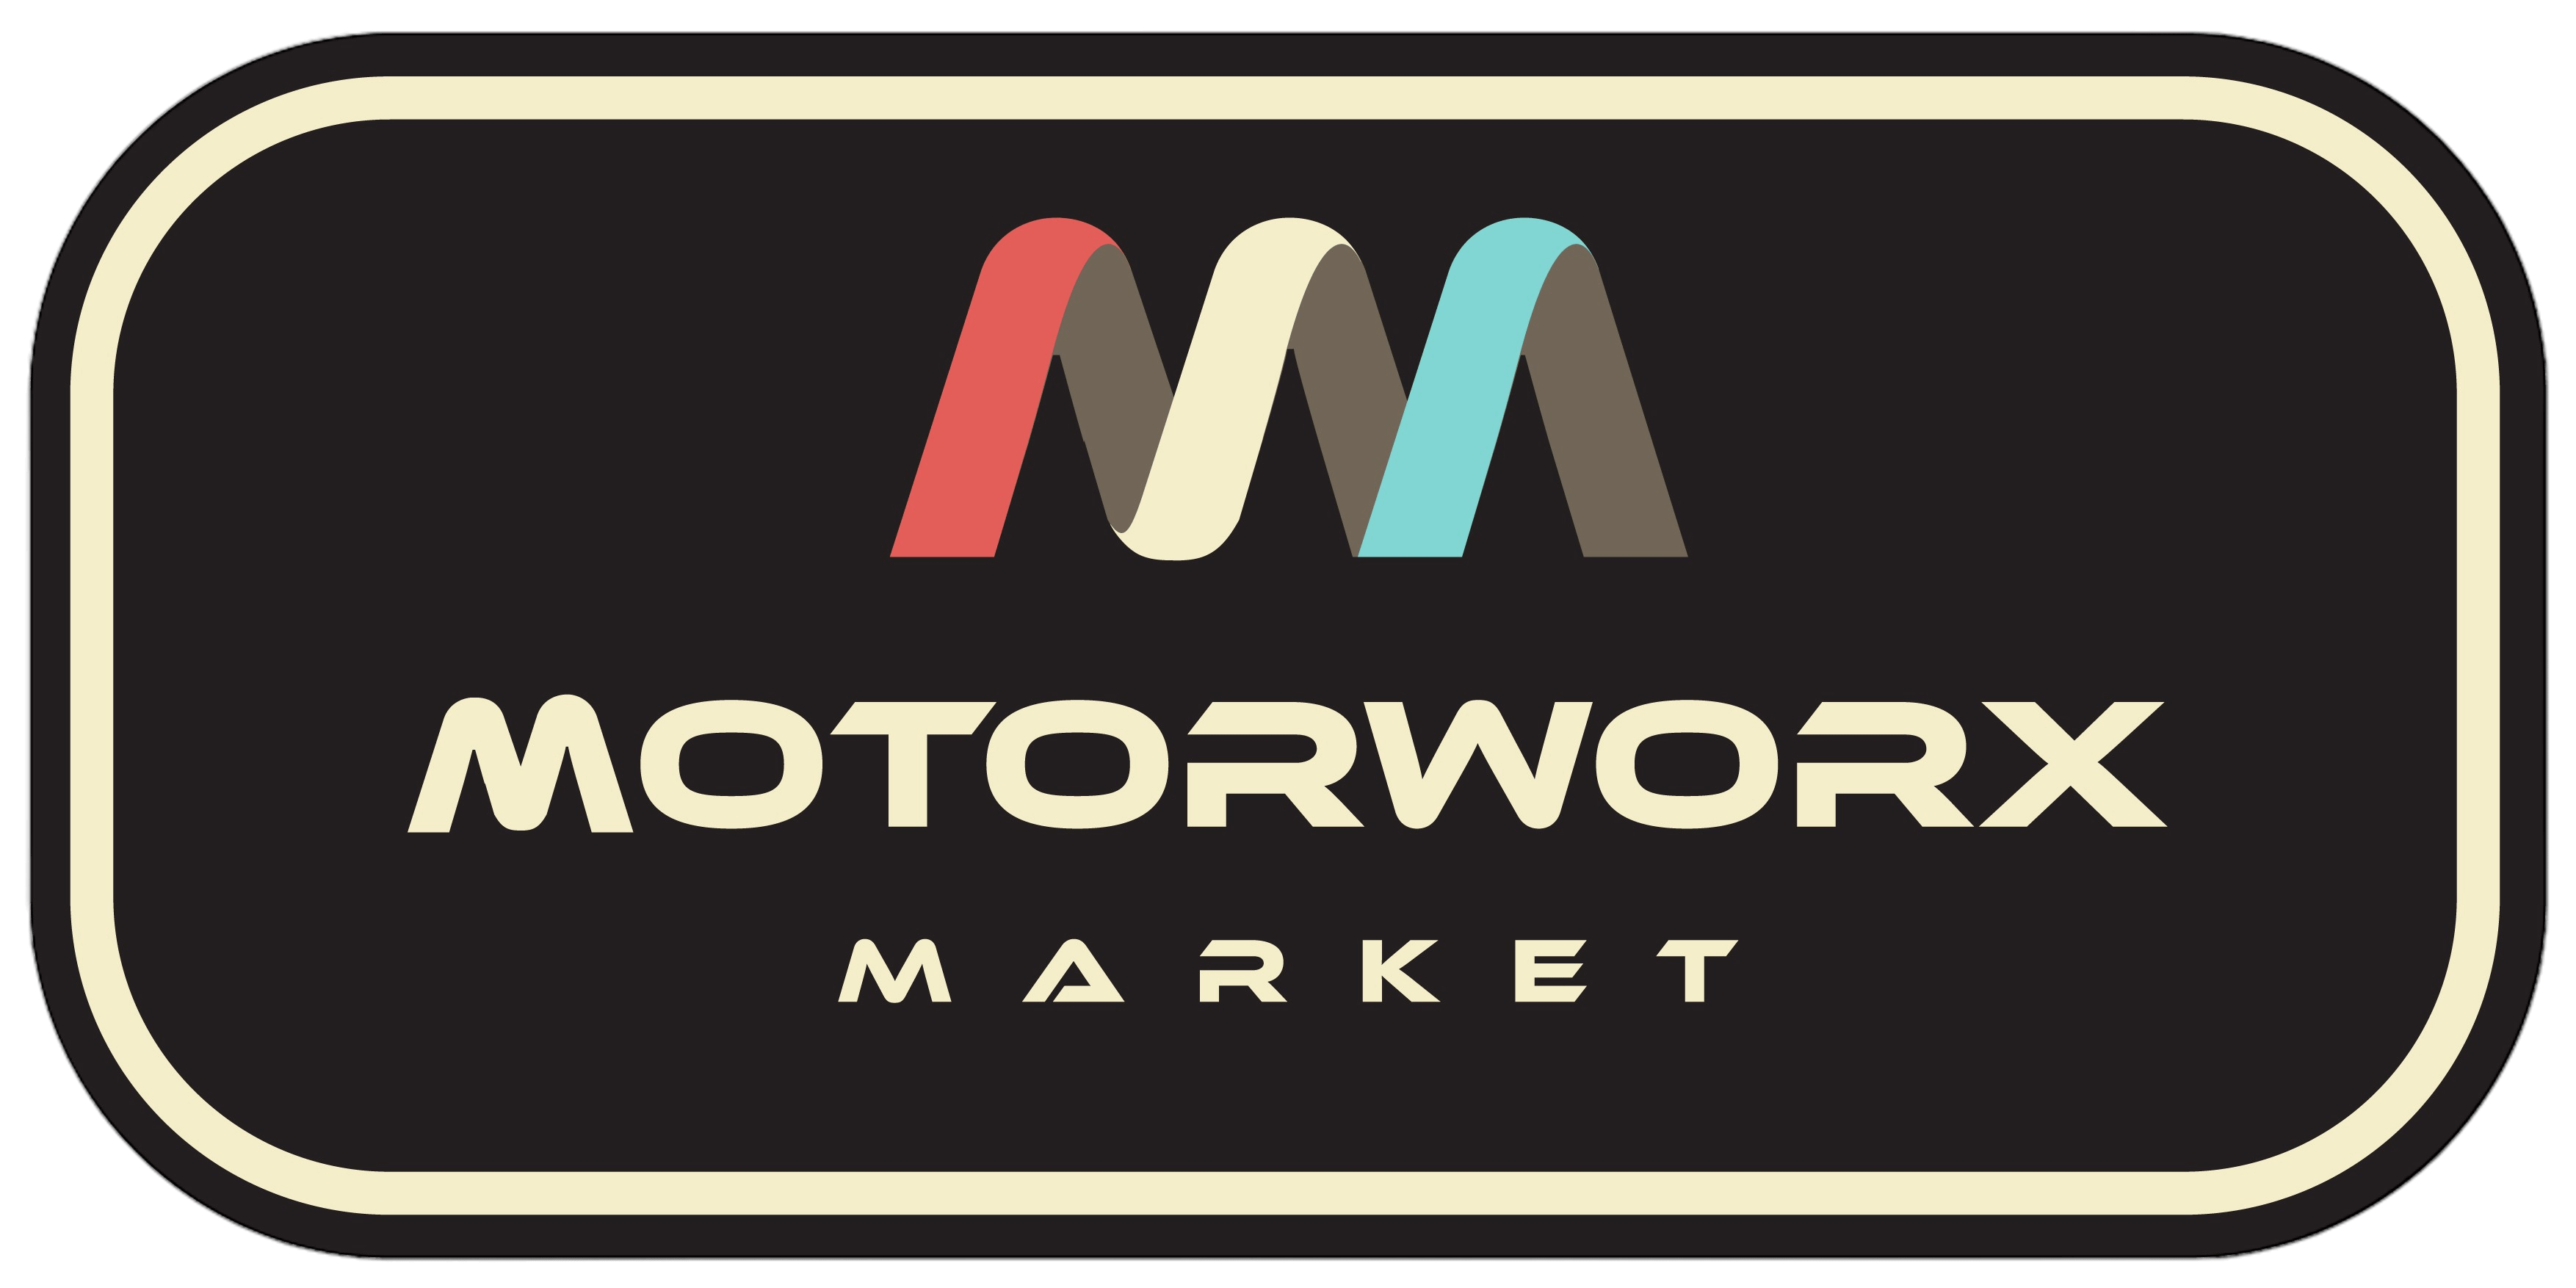 Motorworx Market